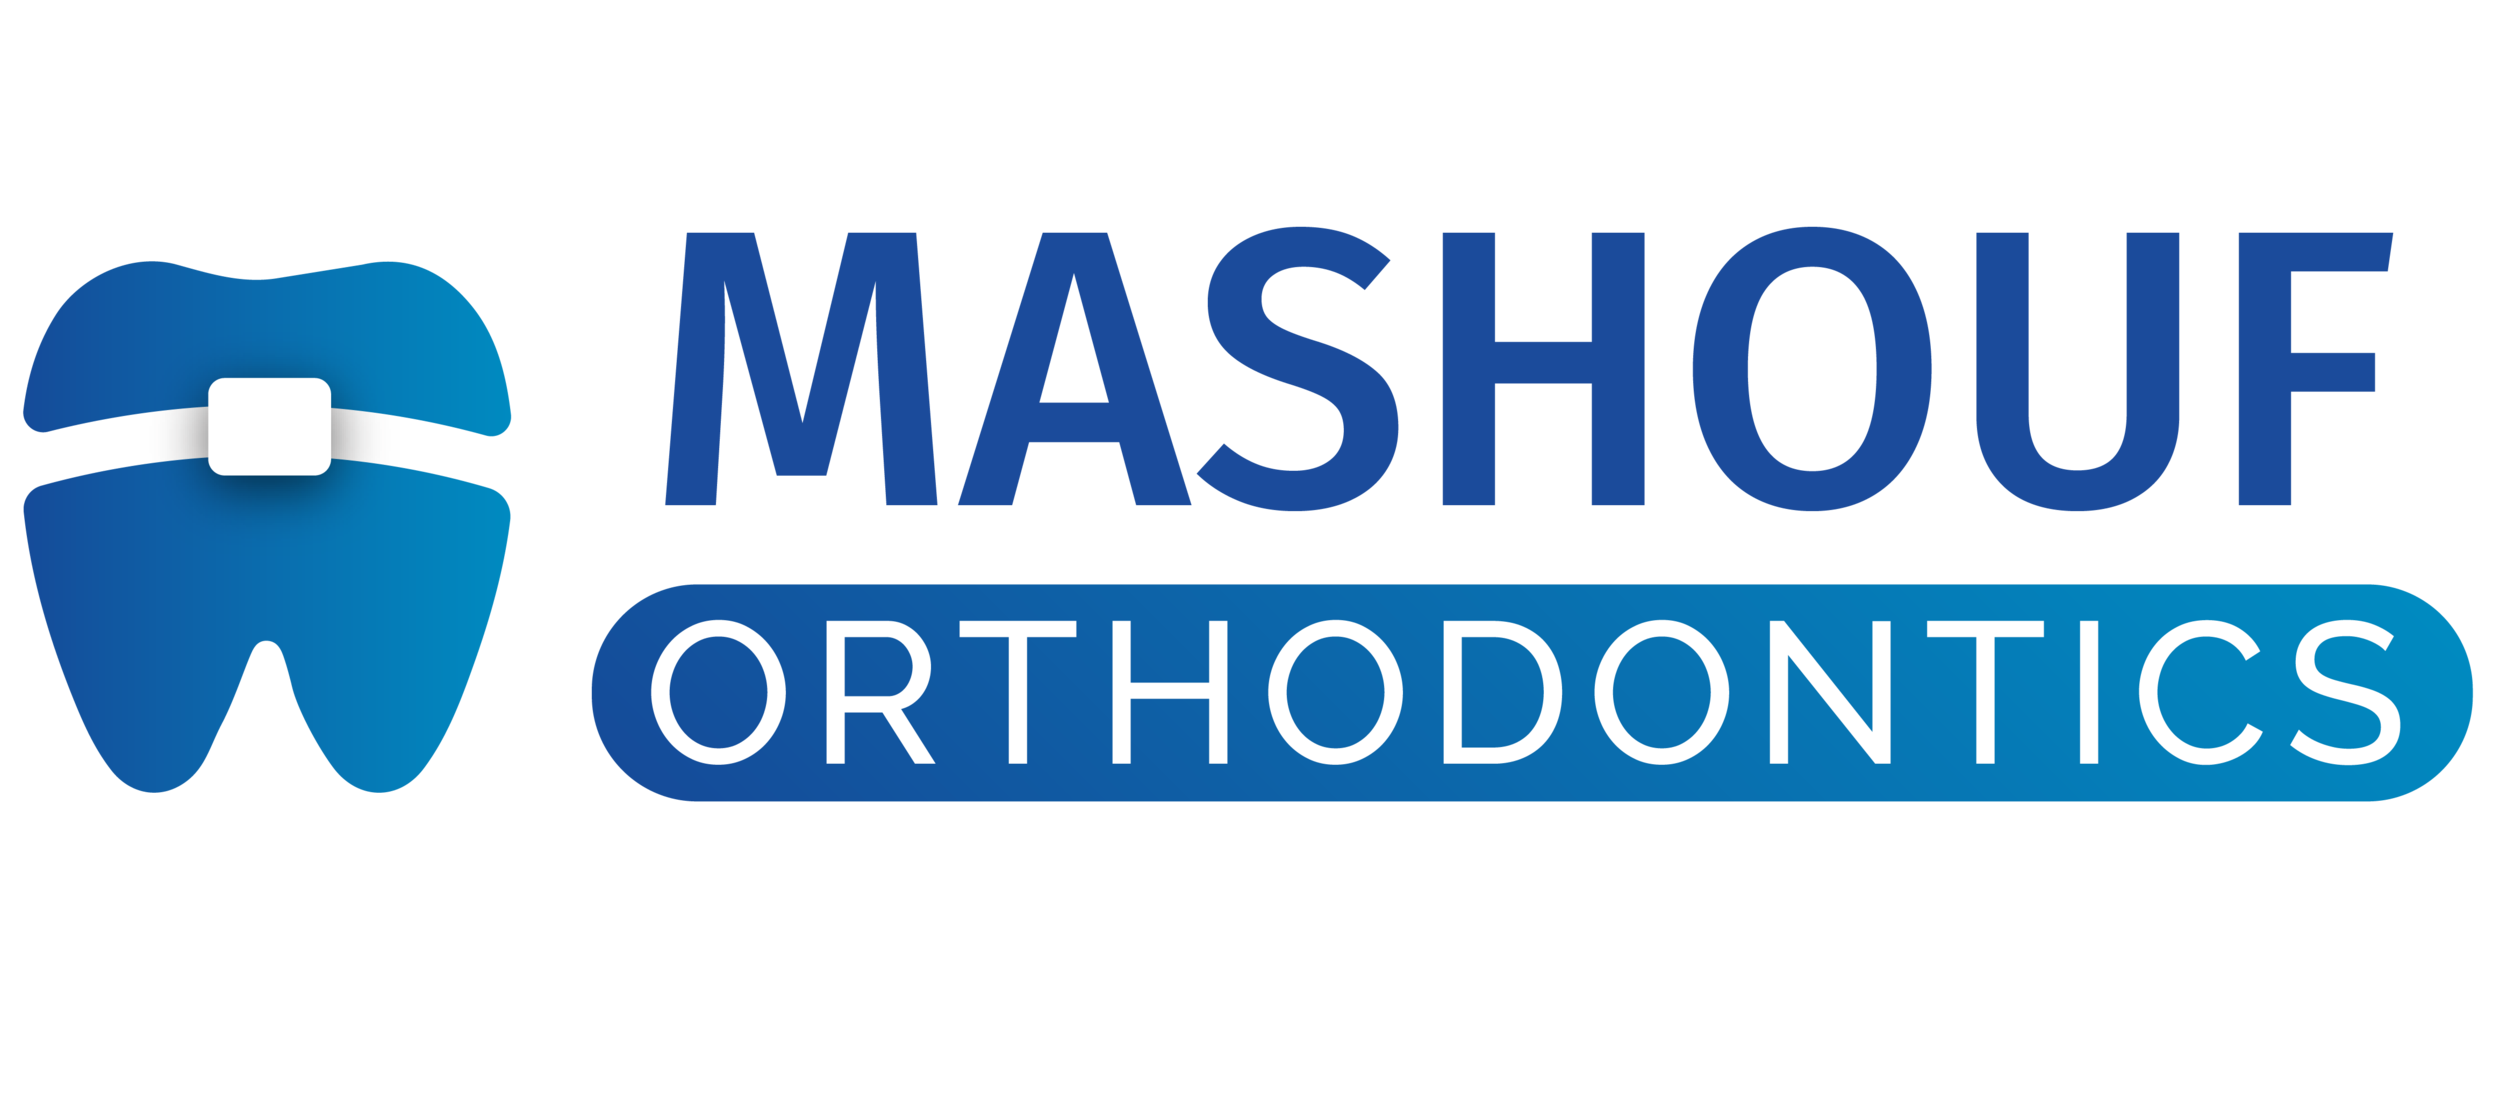 Mashouf Orthodontics